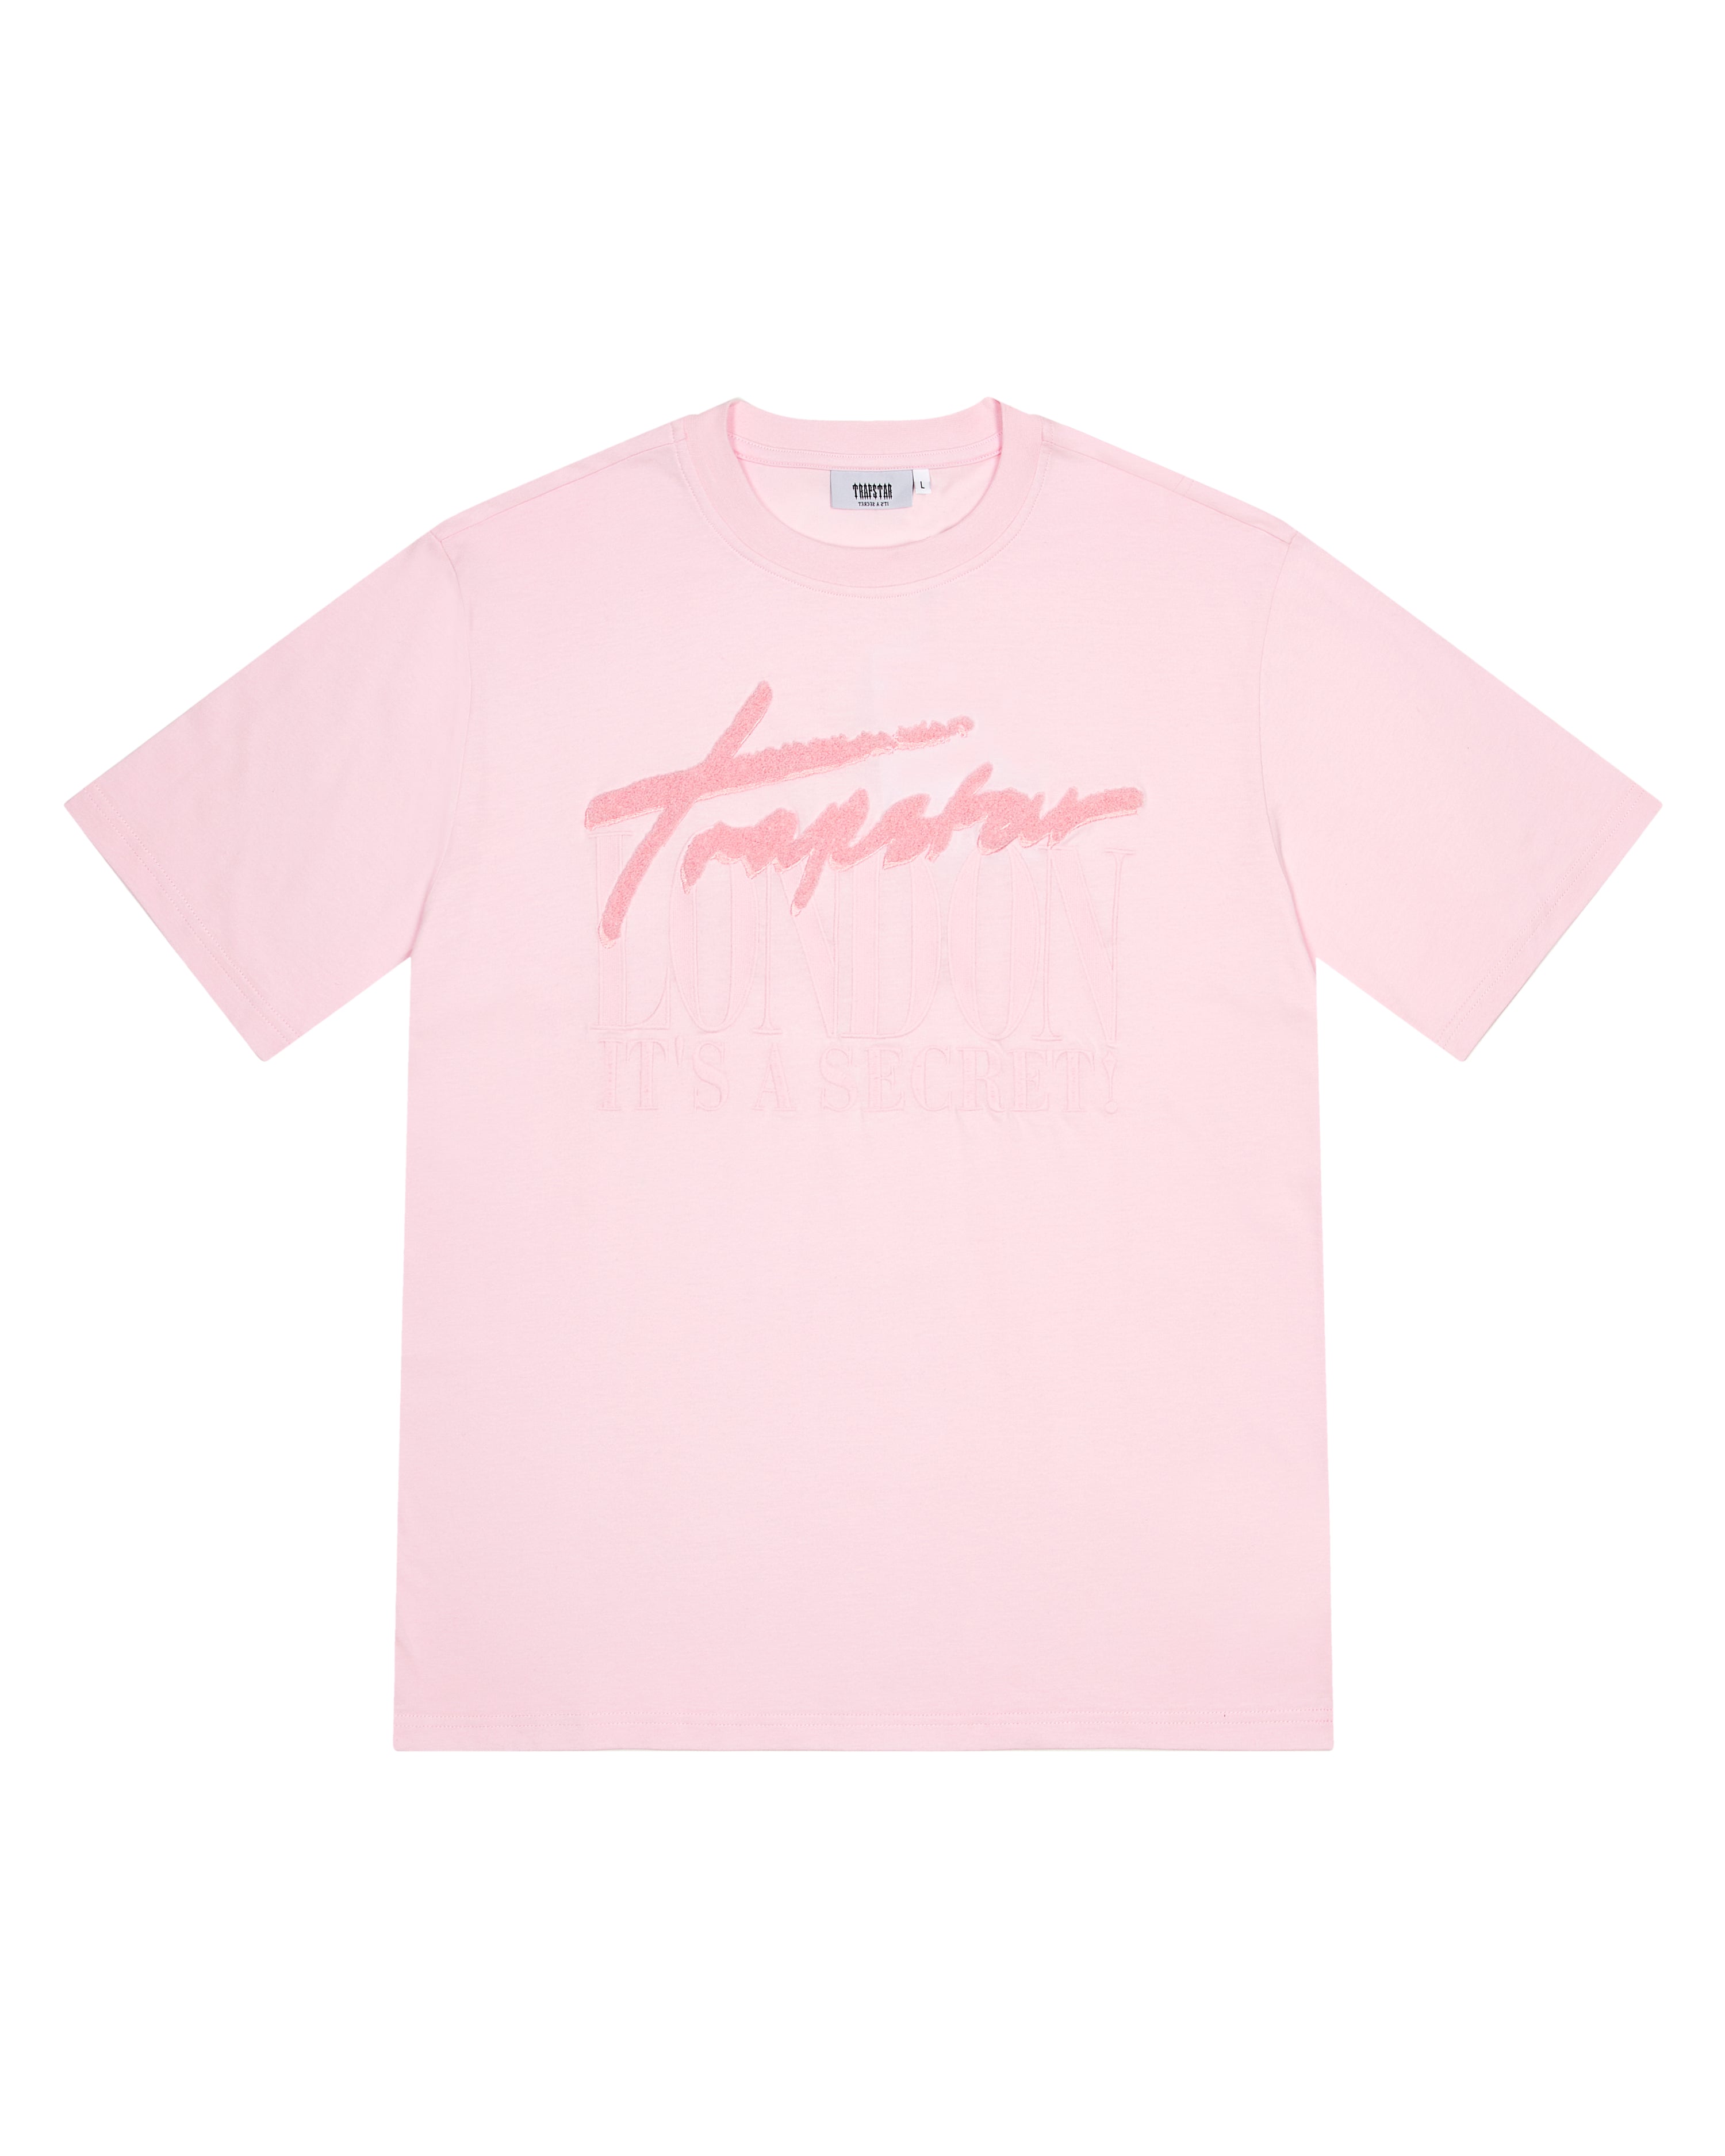 Trapstar London Tee - Pink